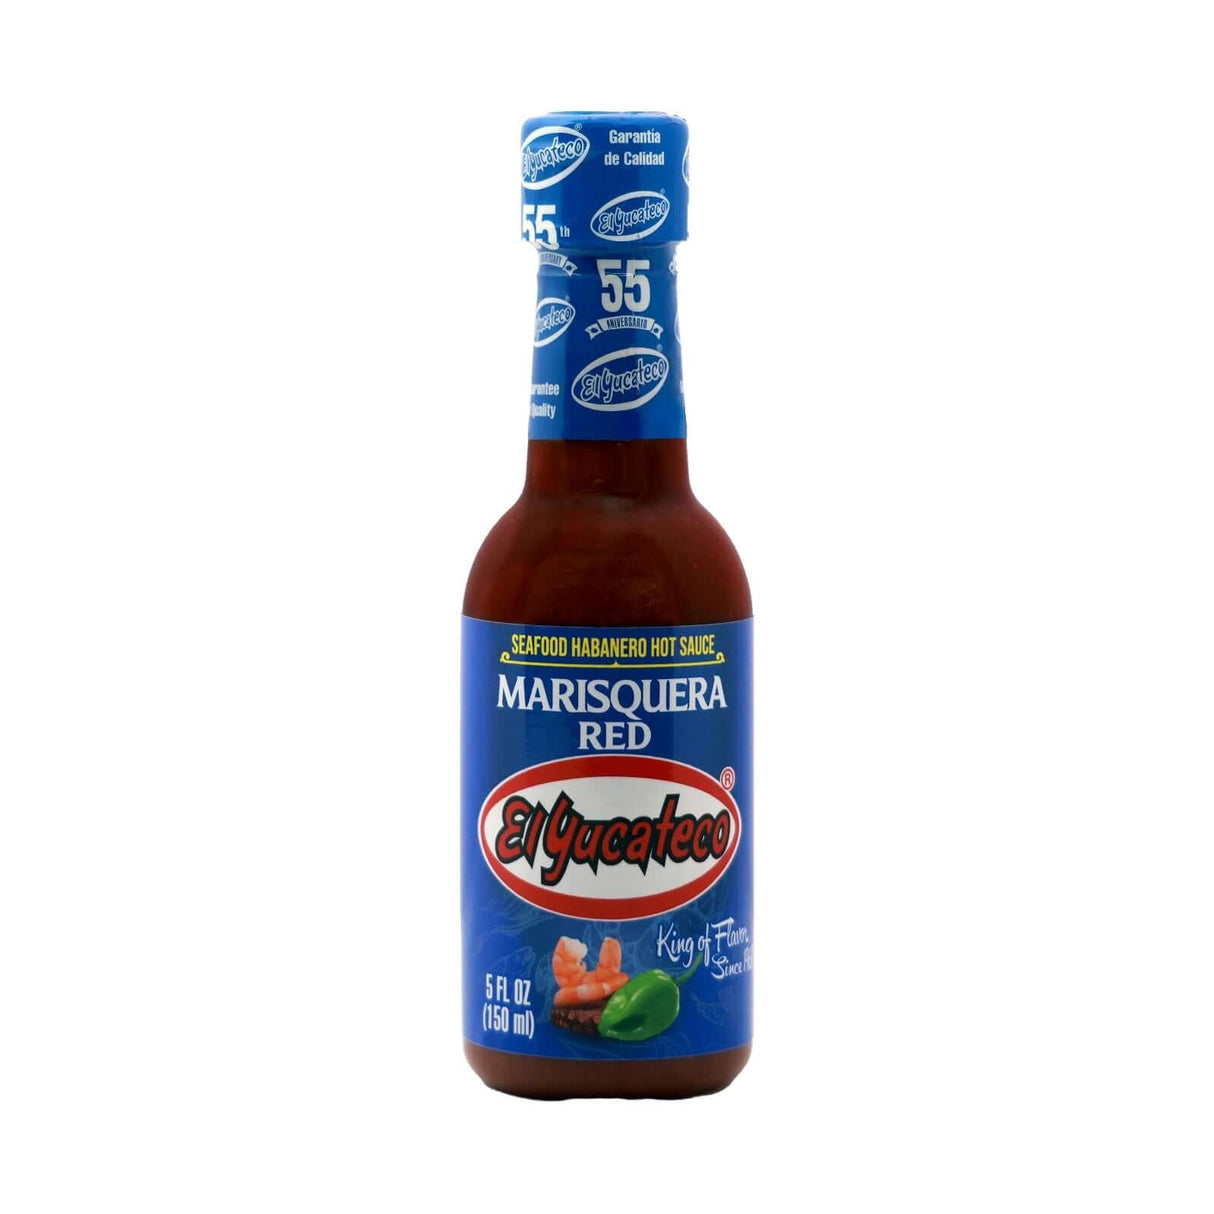 El Yucateco Marisquera Red Seafoods Habanero Hot Sauce